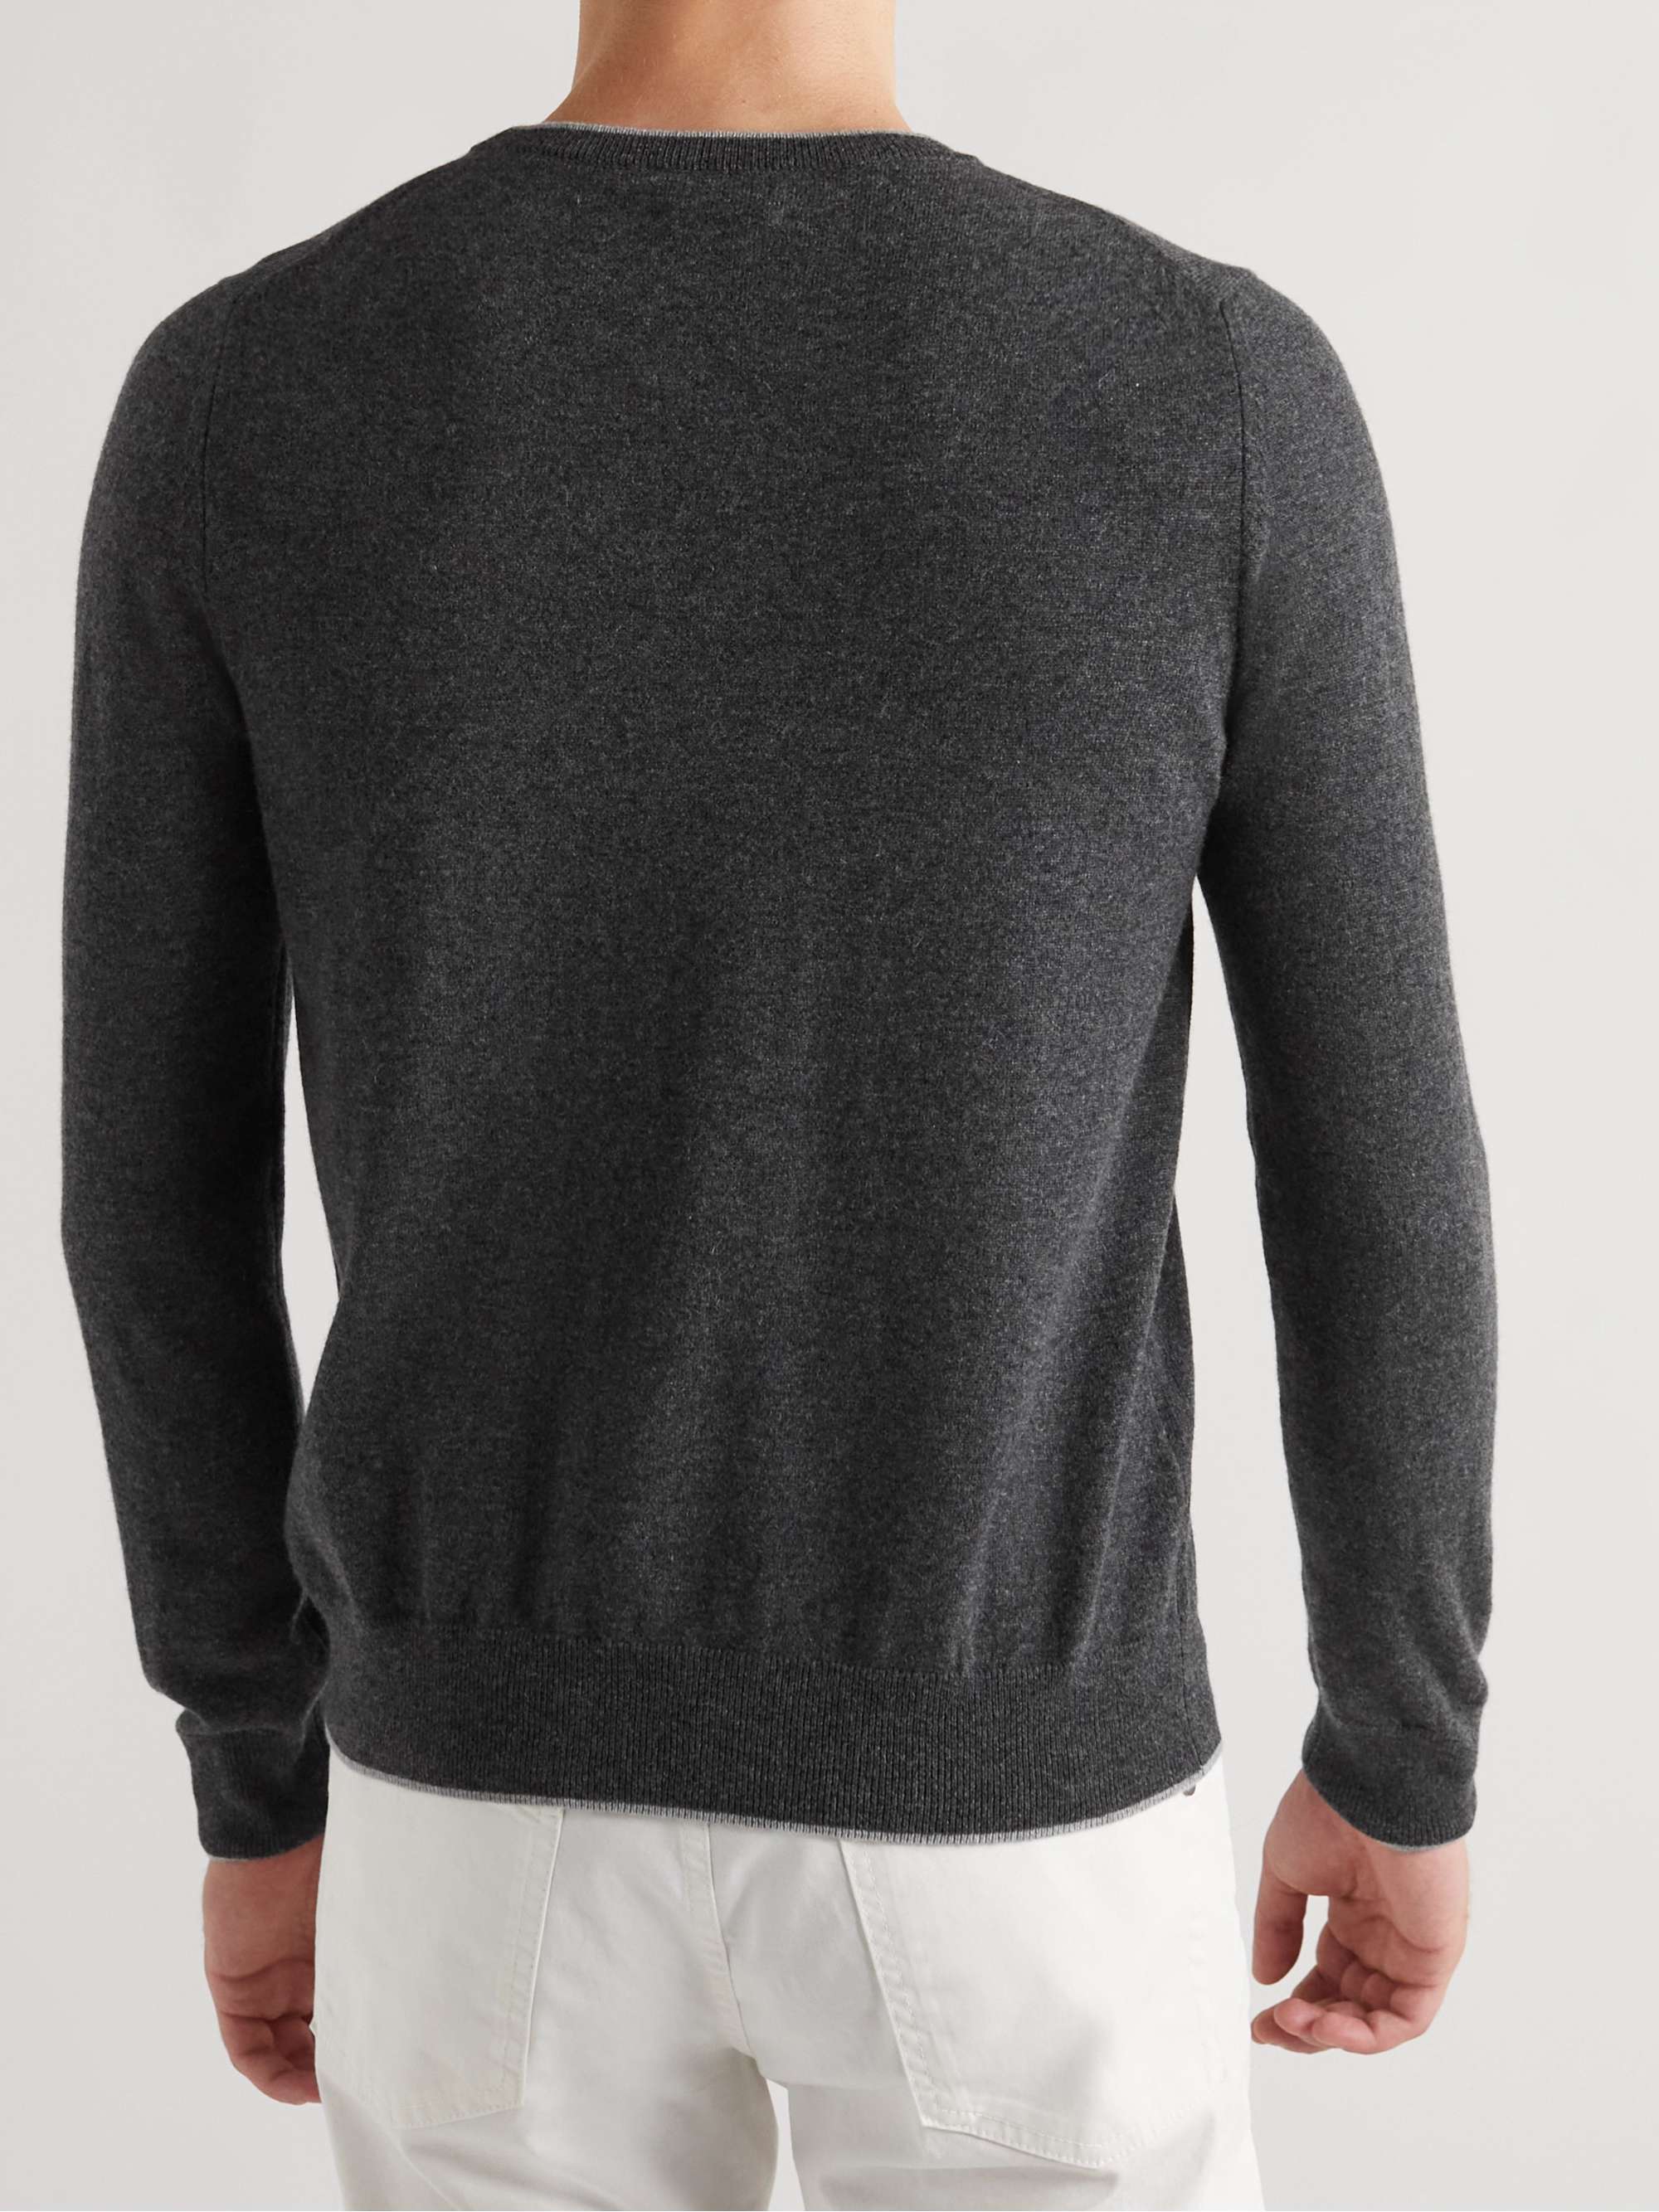 CANALI Slim-Fit Cashmere Sweater for Men | MR PORTER